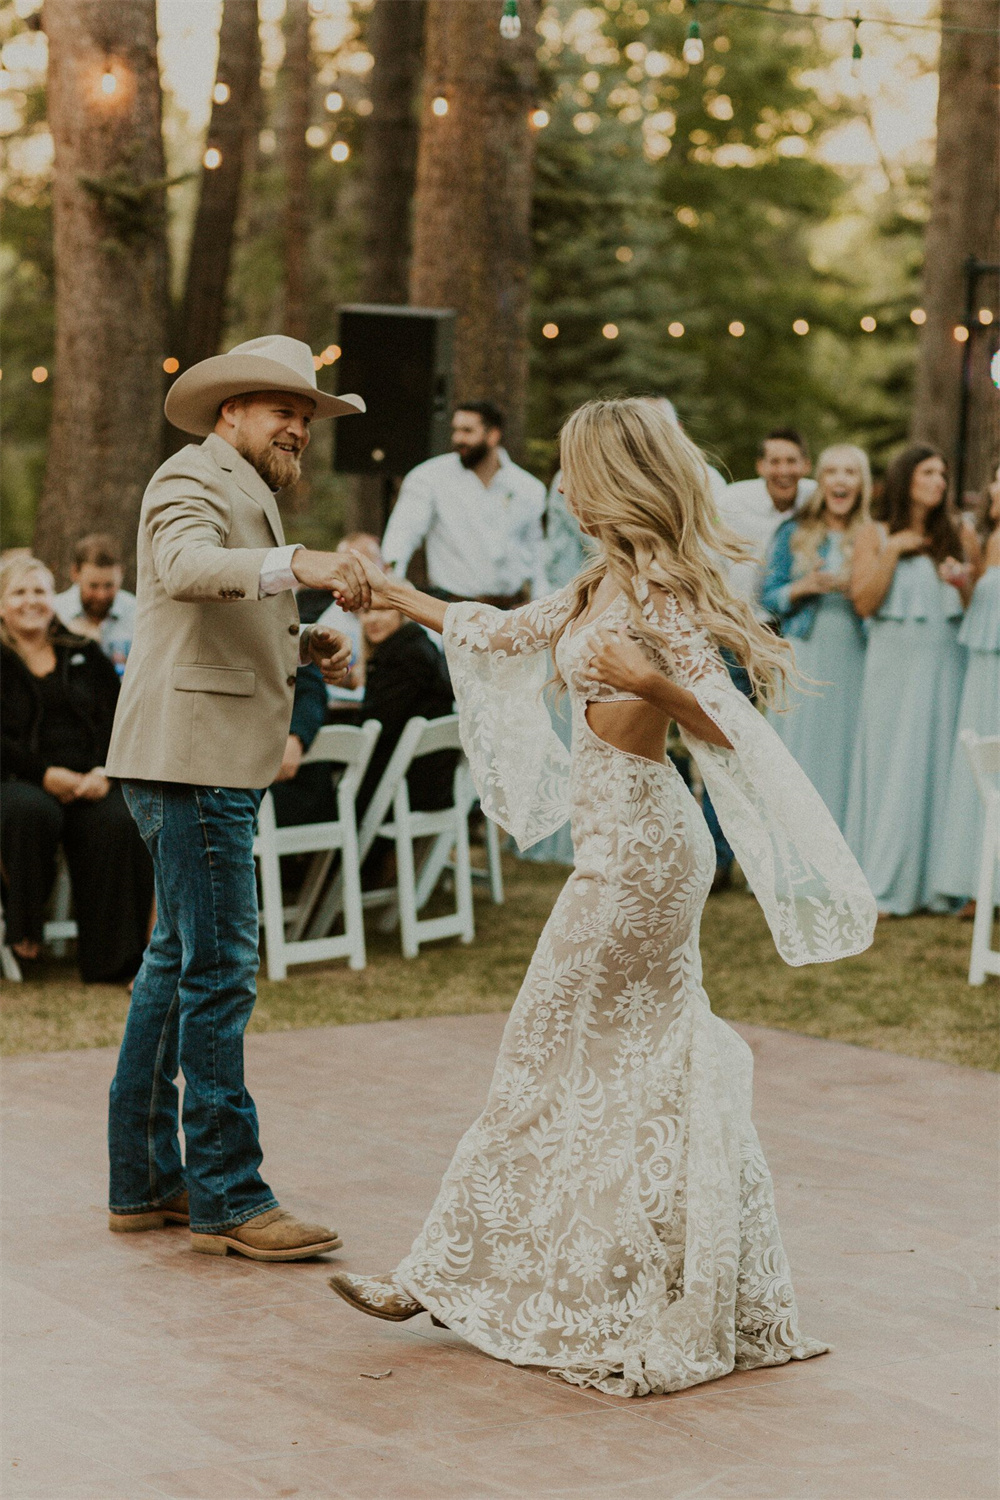 Impressive Country Wedding Dance with Cowboys and Boho Dresses